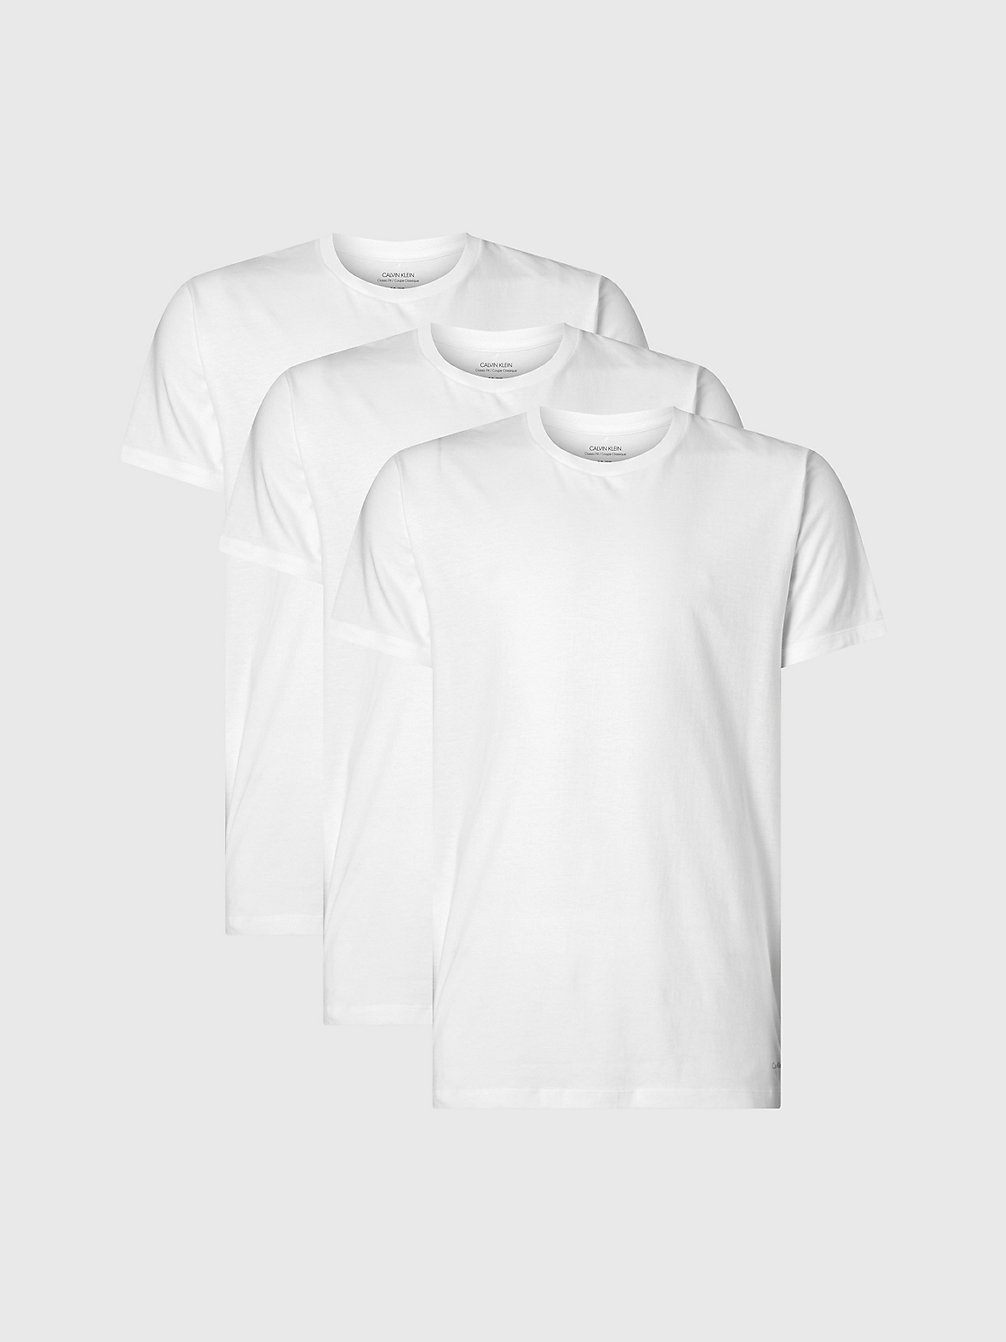 WHITE > 3er-Pack T-Shirts - Cotton Classics > undefined men - Calvin Klein